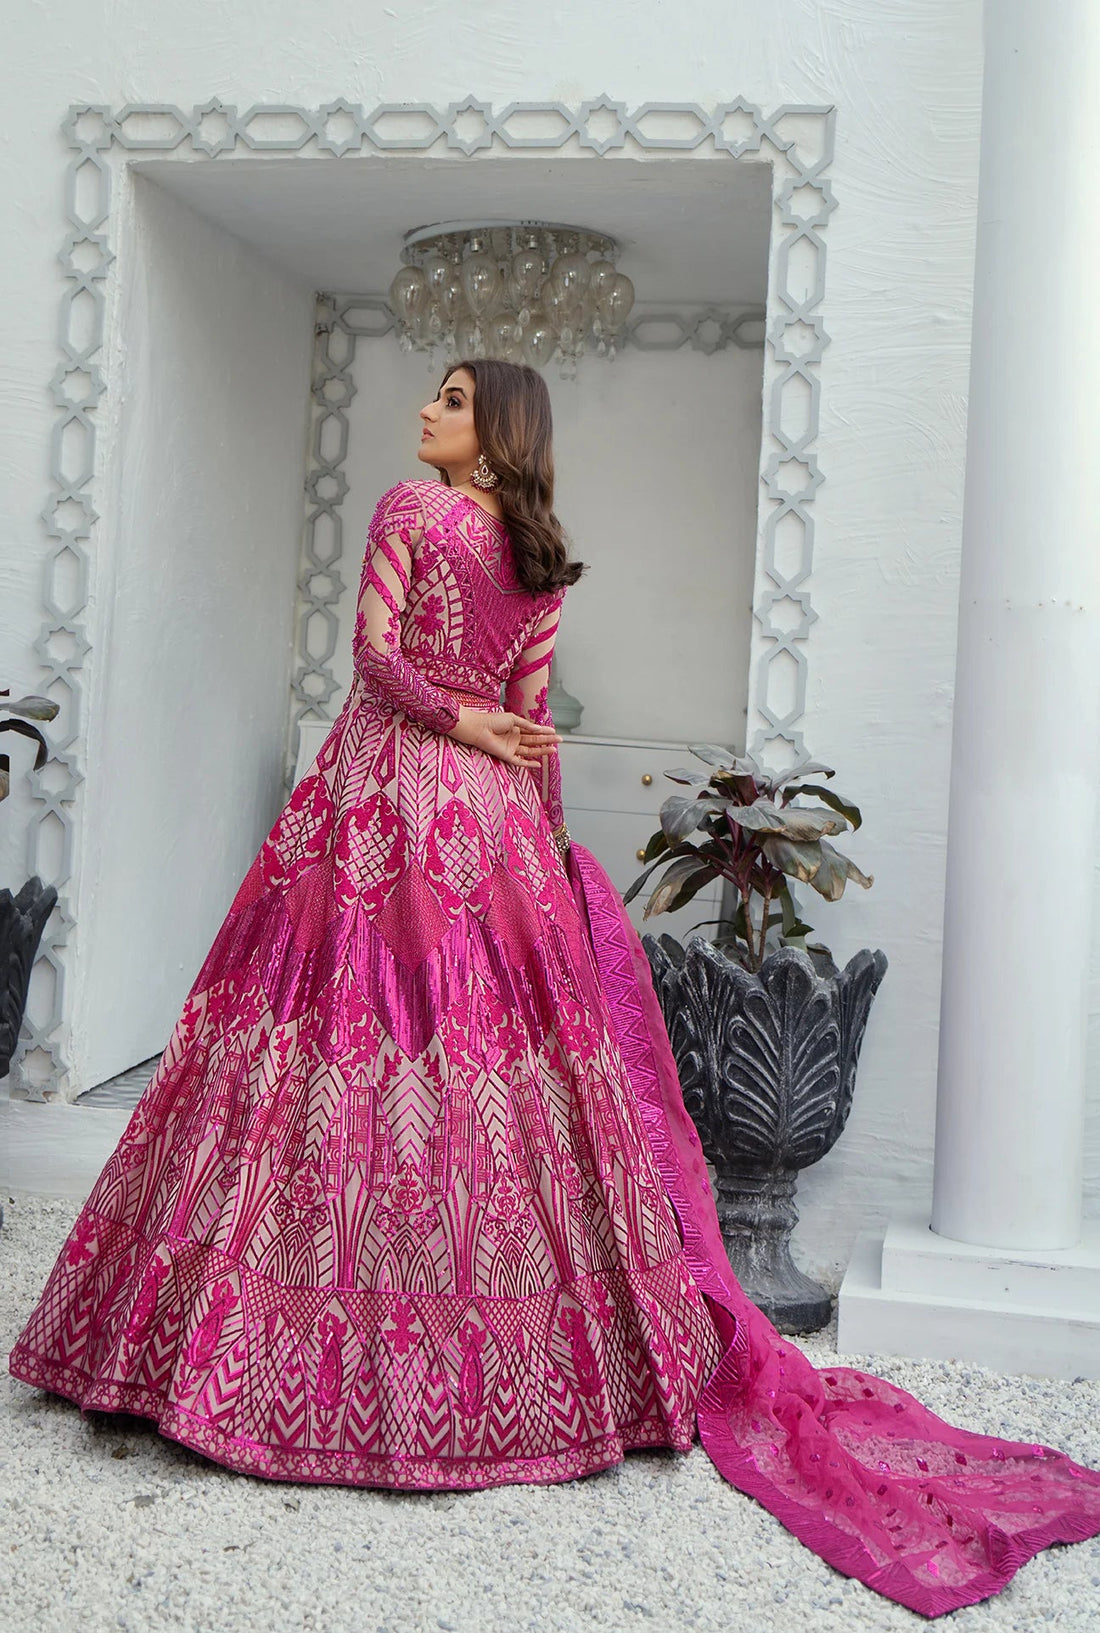 Waqas Shah | Malika E Jahan | Sufala - Khanumjan  Pakistani Clothes and Designer Dresses in UK, USA 